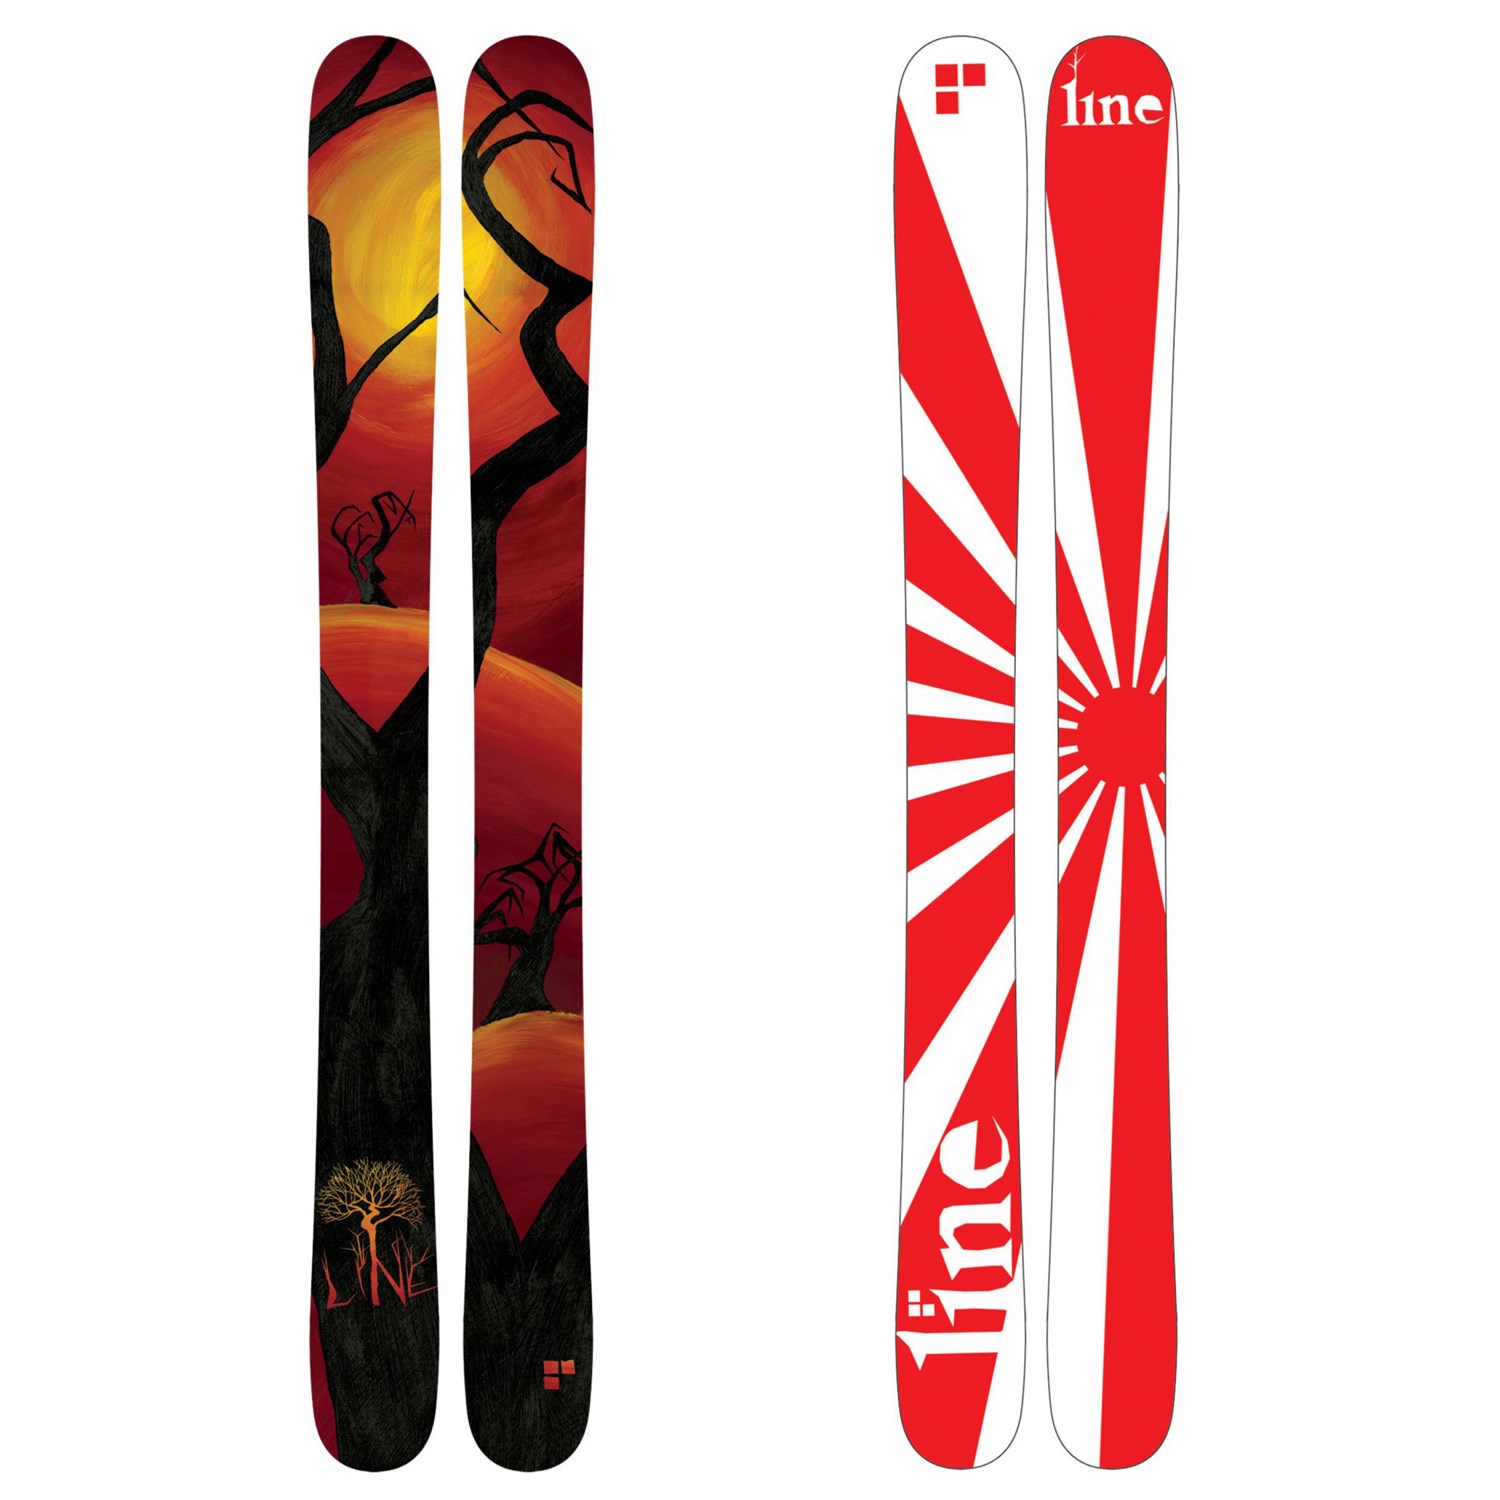 Line Skis EP Pro Skis 2011 | evo